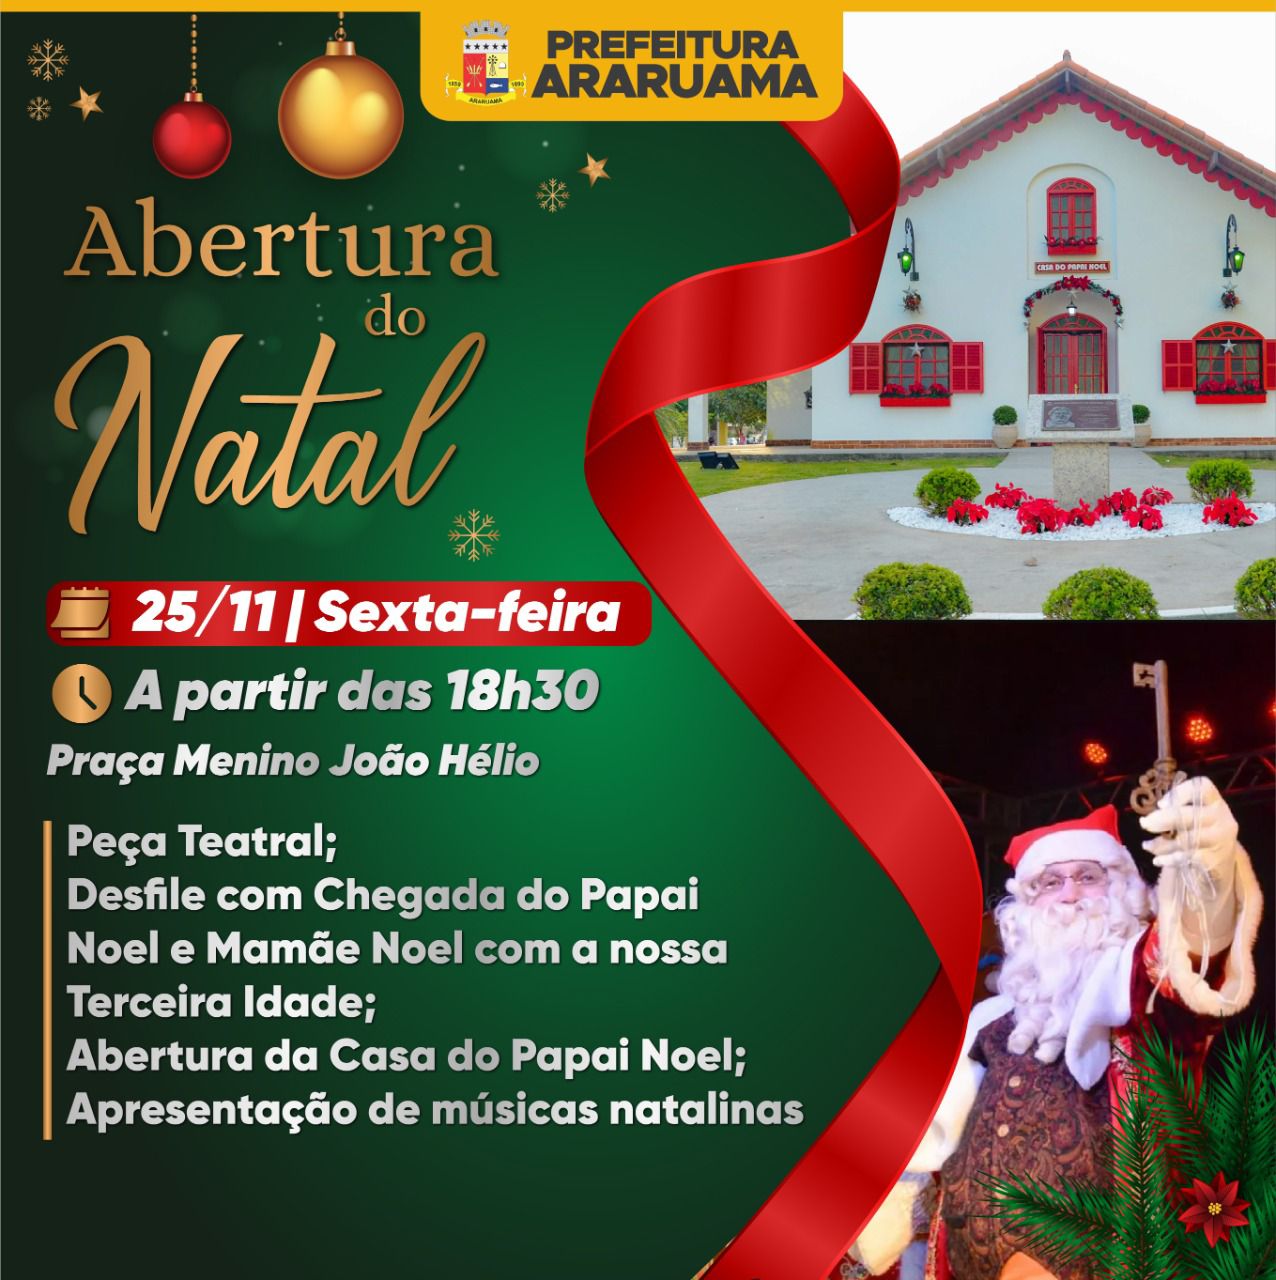 Abertura da Casa do Papai Noel vai marcar a chegada do Natal em Araruama